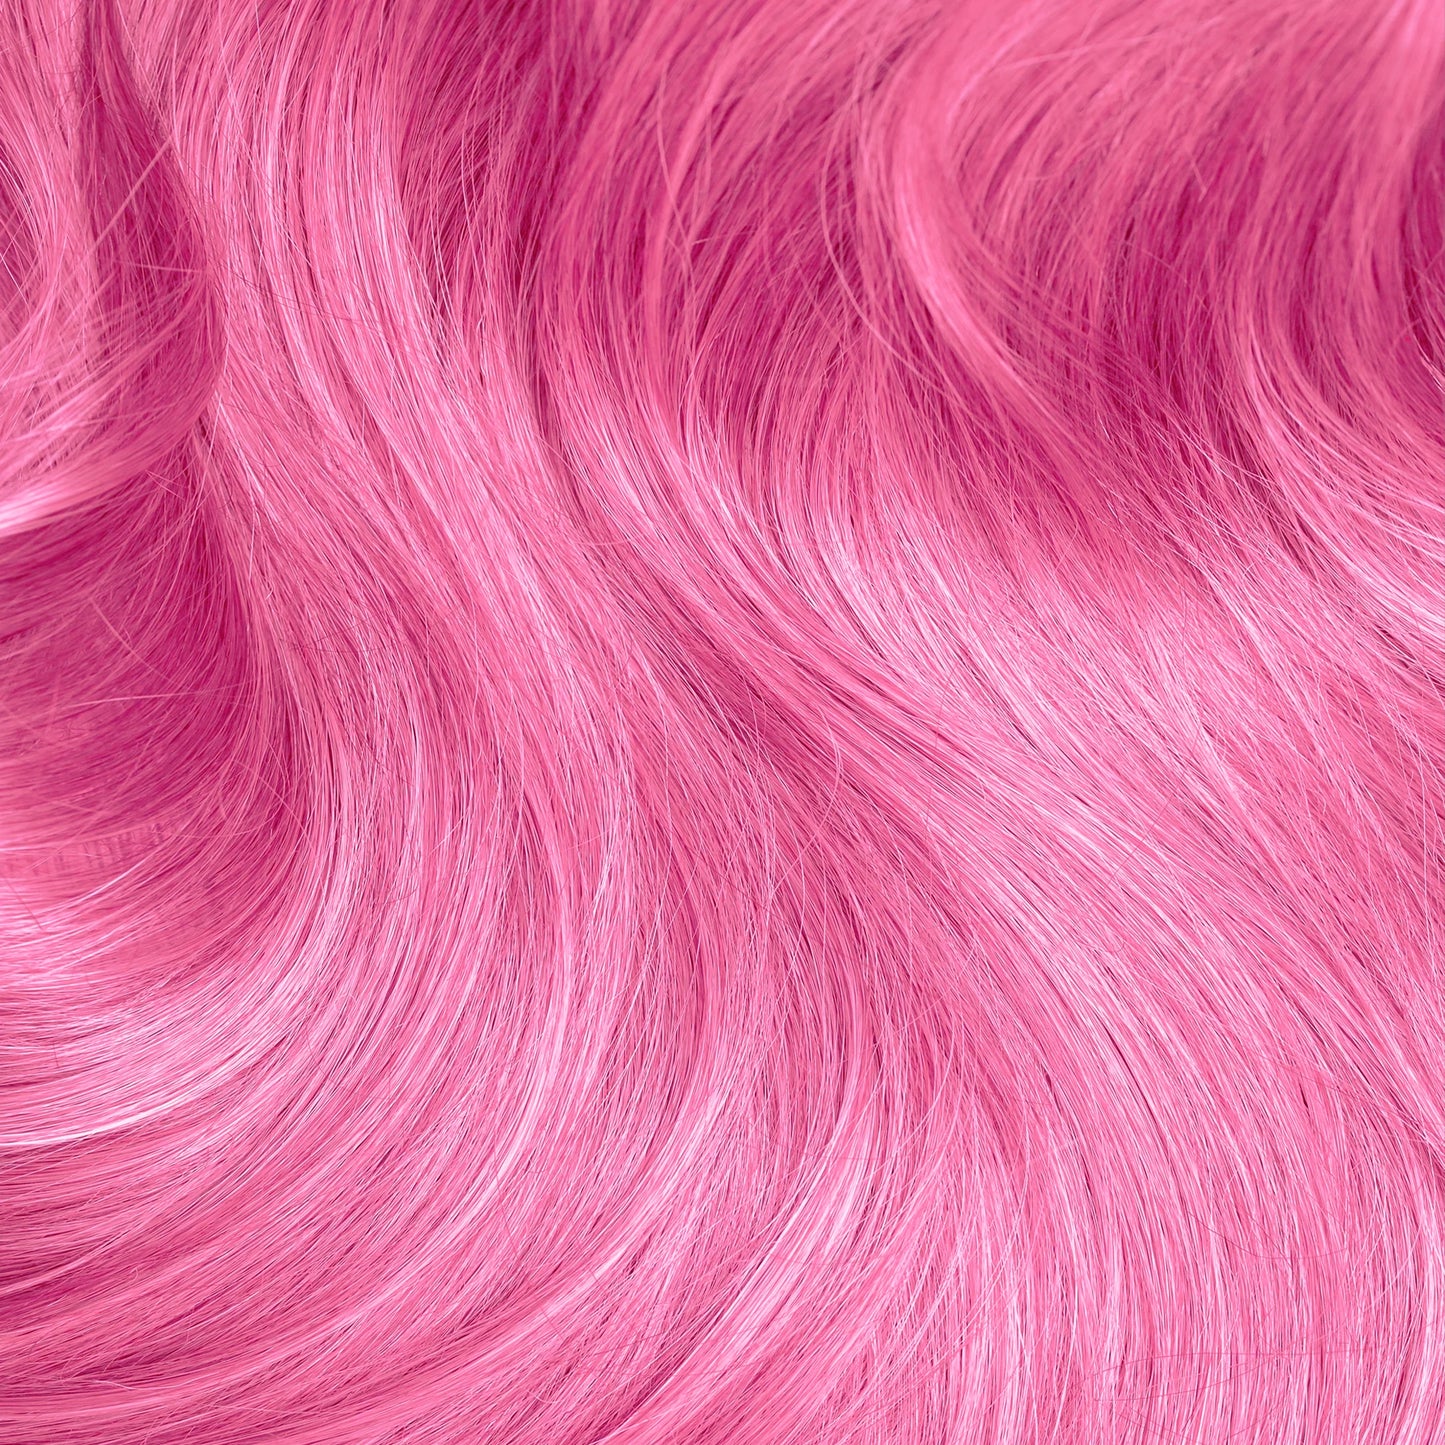 PASTEL PETAL PINK Hair Dye Lunar Tides